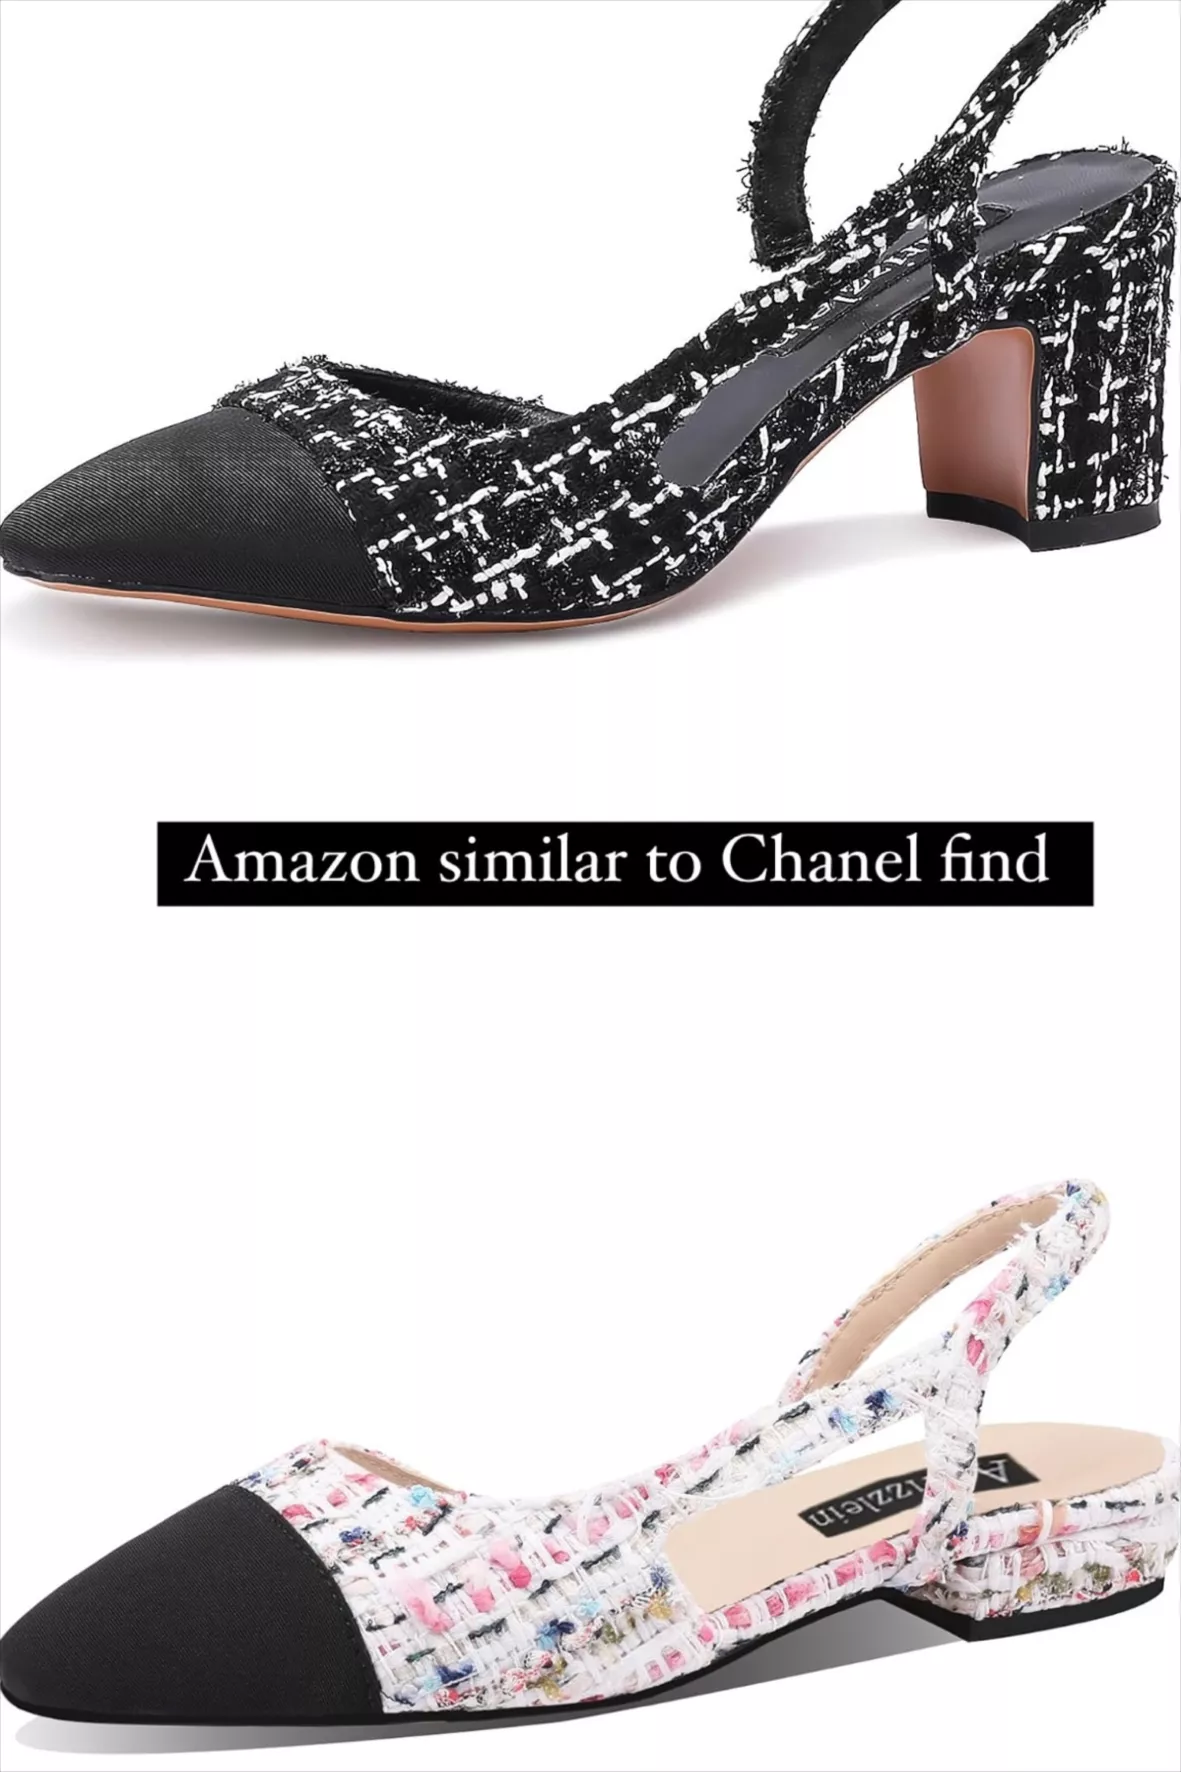 redsolesandredwine's Chanel inspired Collection on LTK